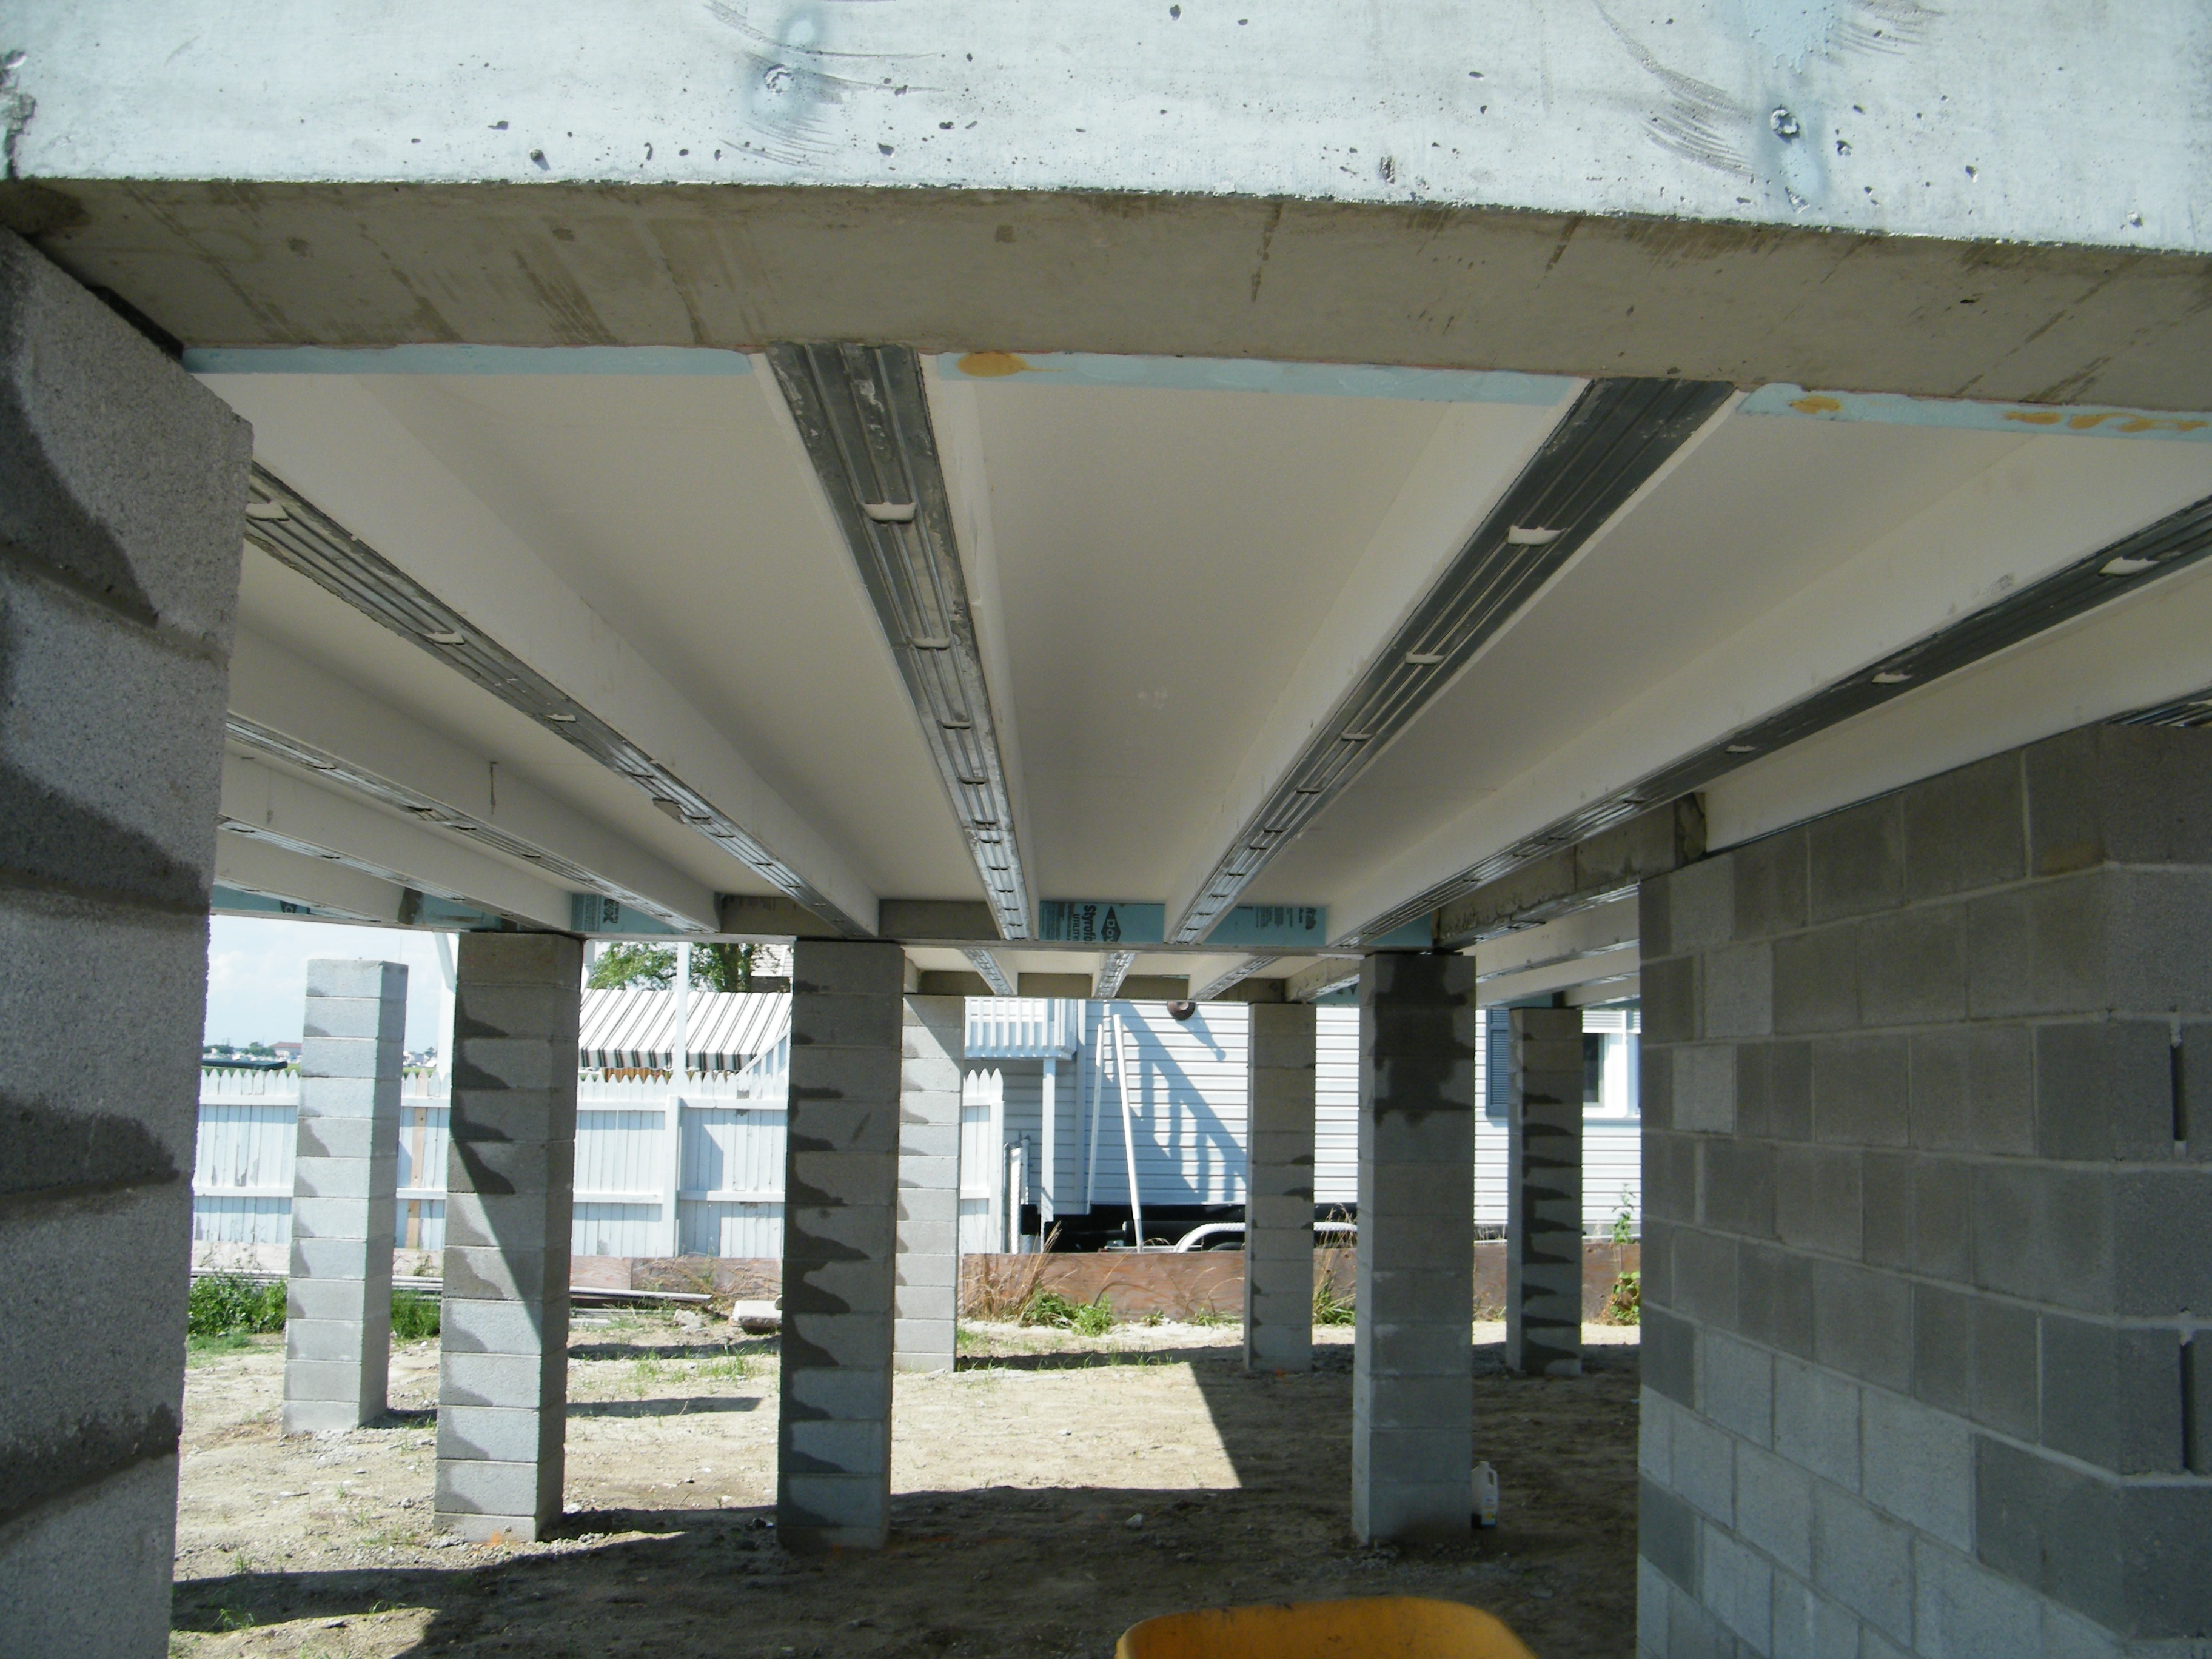 Prespan precast concrete flooring system from Northeast Precast